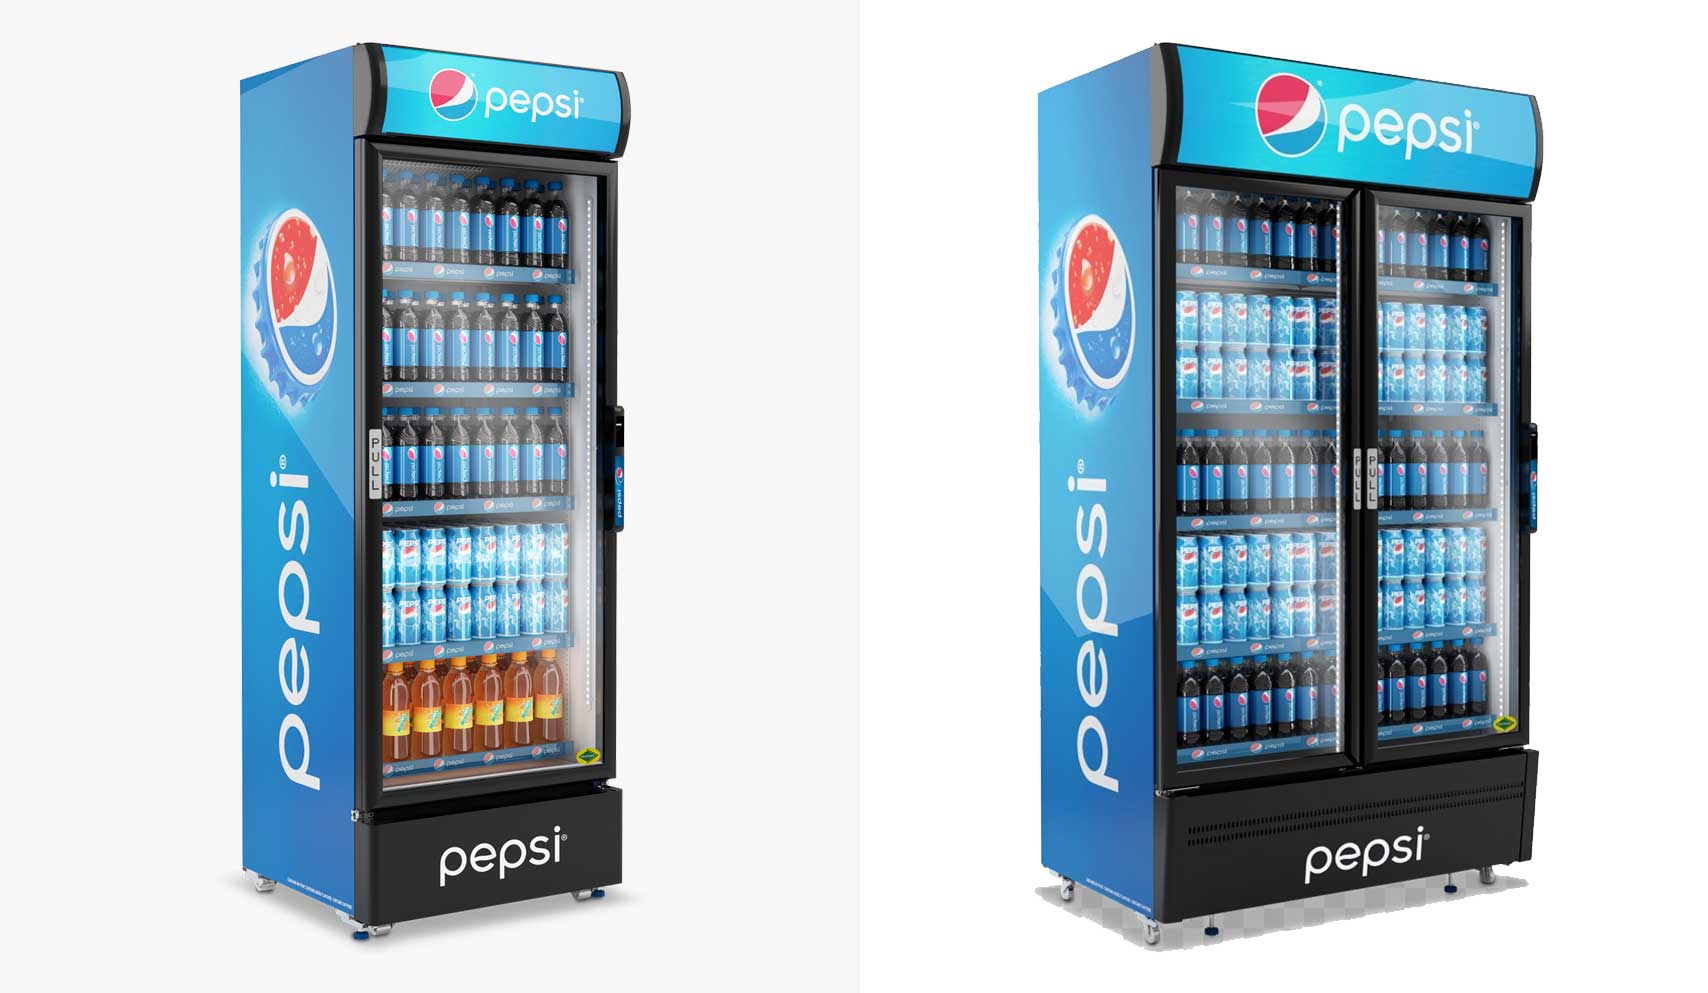 Thu mua tủ mát Coca cola, Pepsi, Vinamilk và các hãng